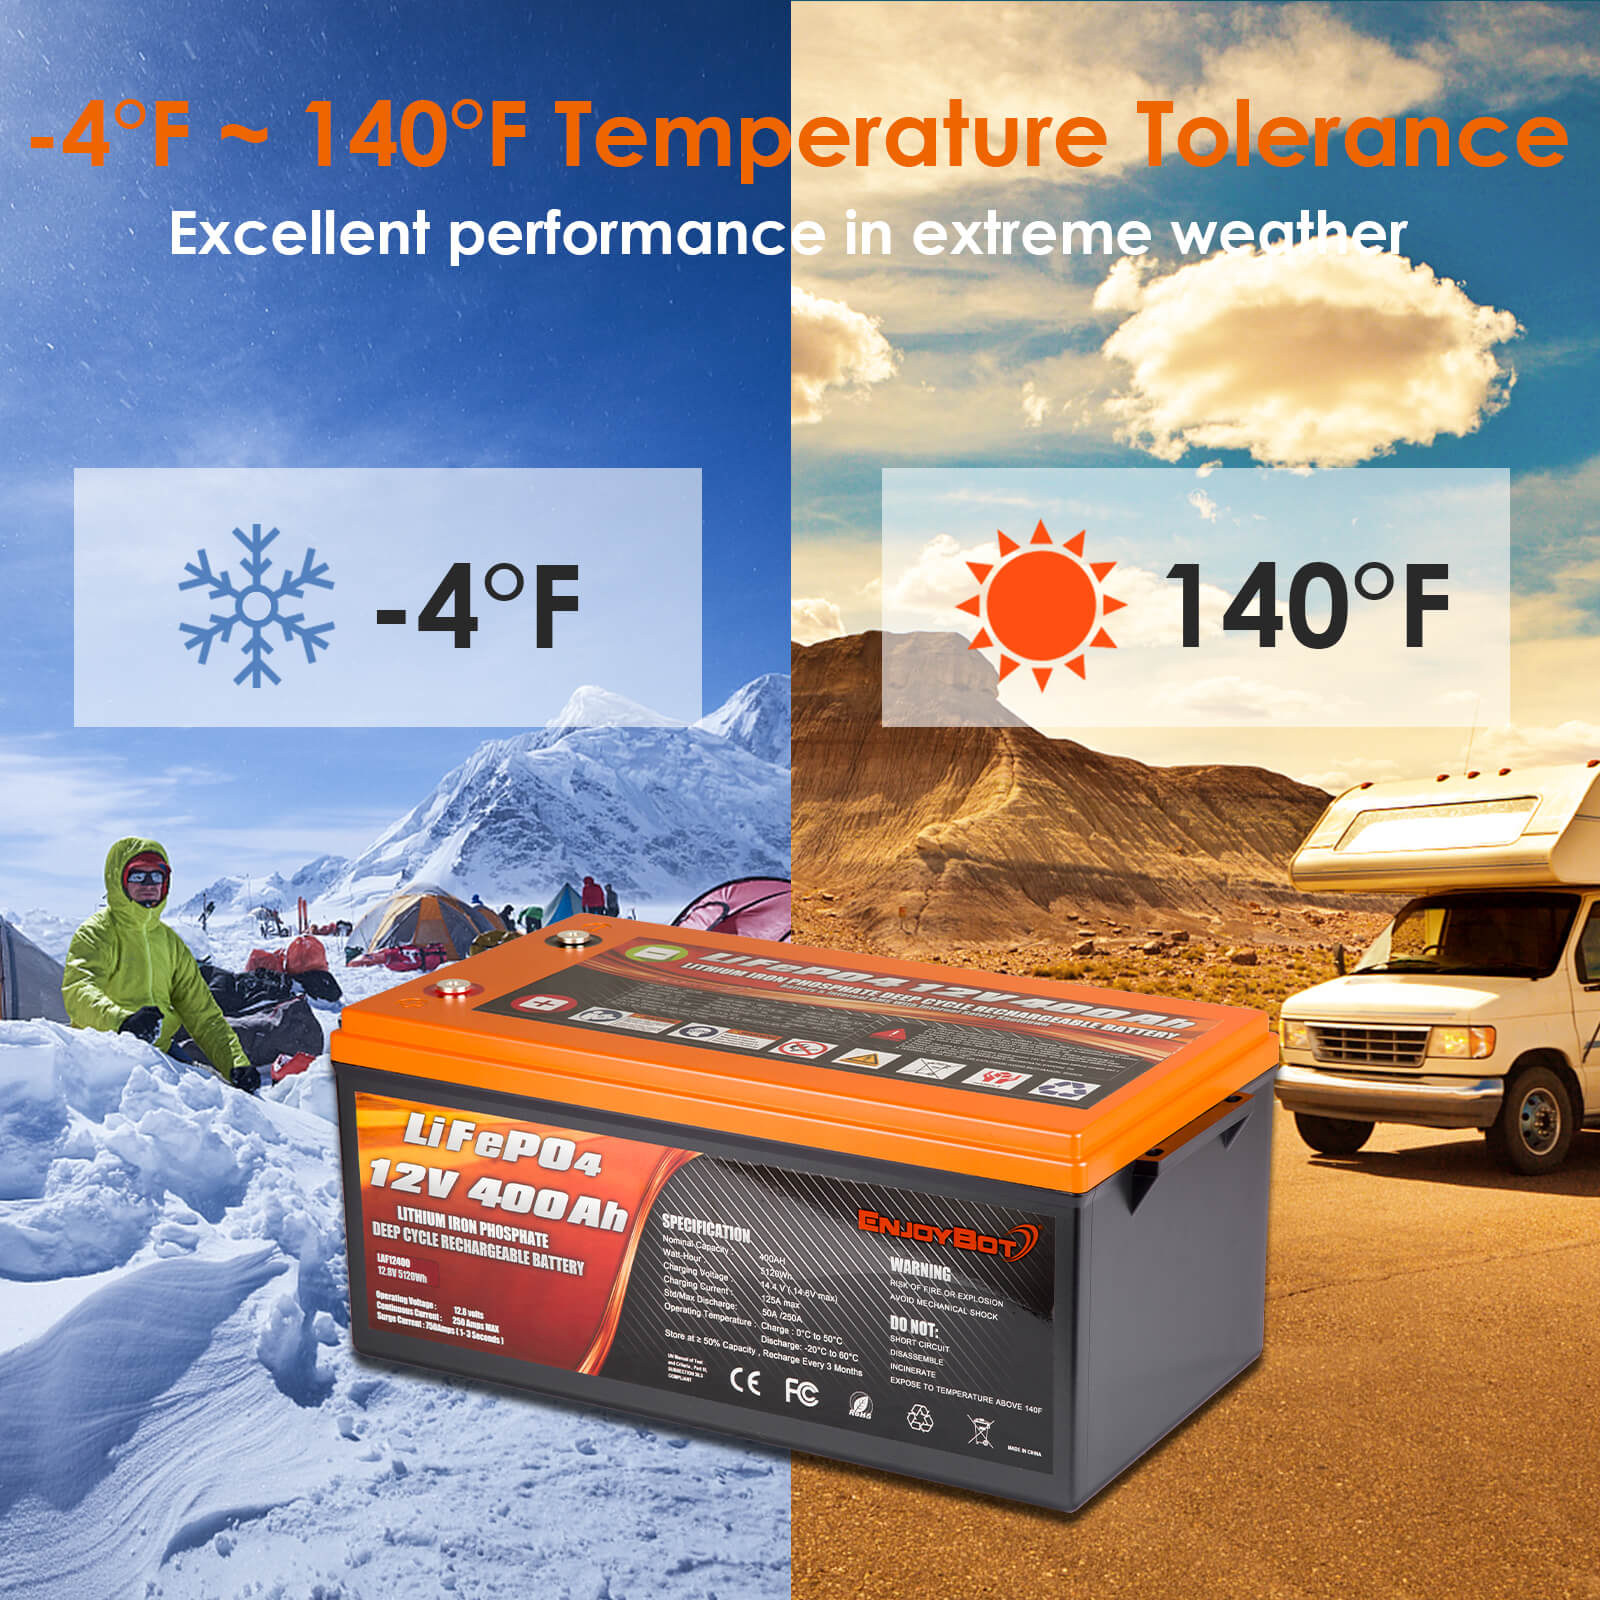 Enjoybot 12v 400ah LiFePO4 Battery - Temperacture Tolerance